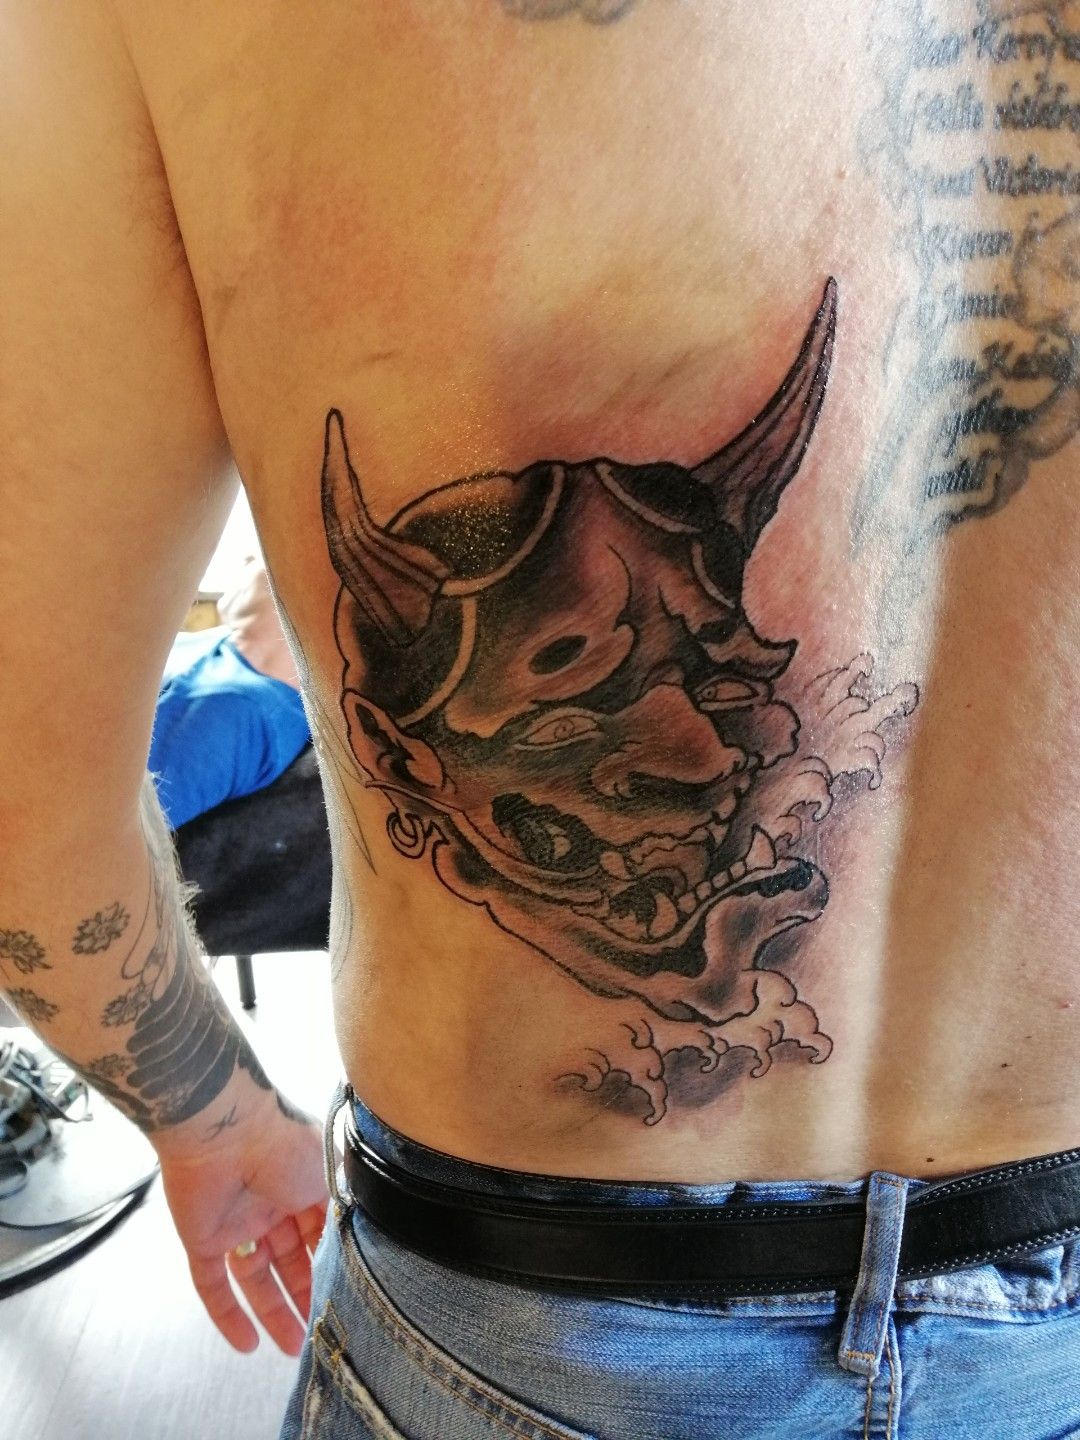 Audie fulfer Tattoo Portfolio  Tattoo Artist in Fresno CA